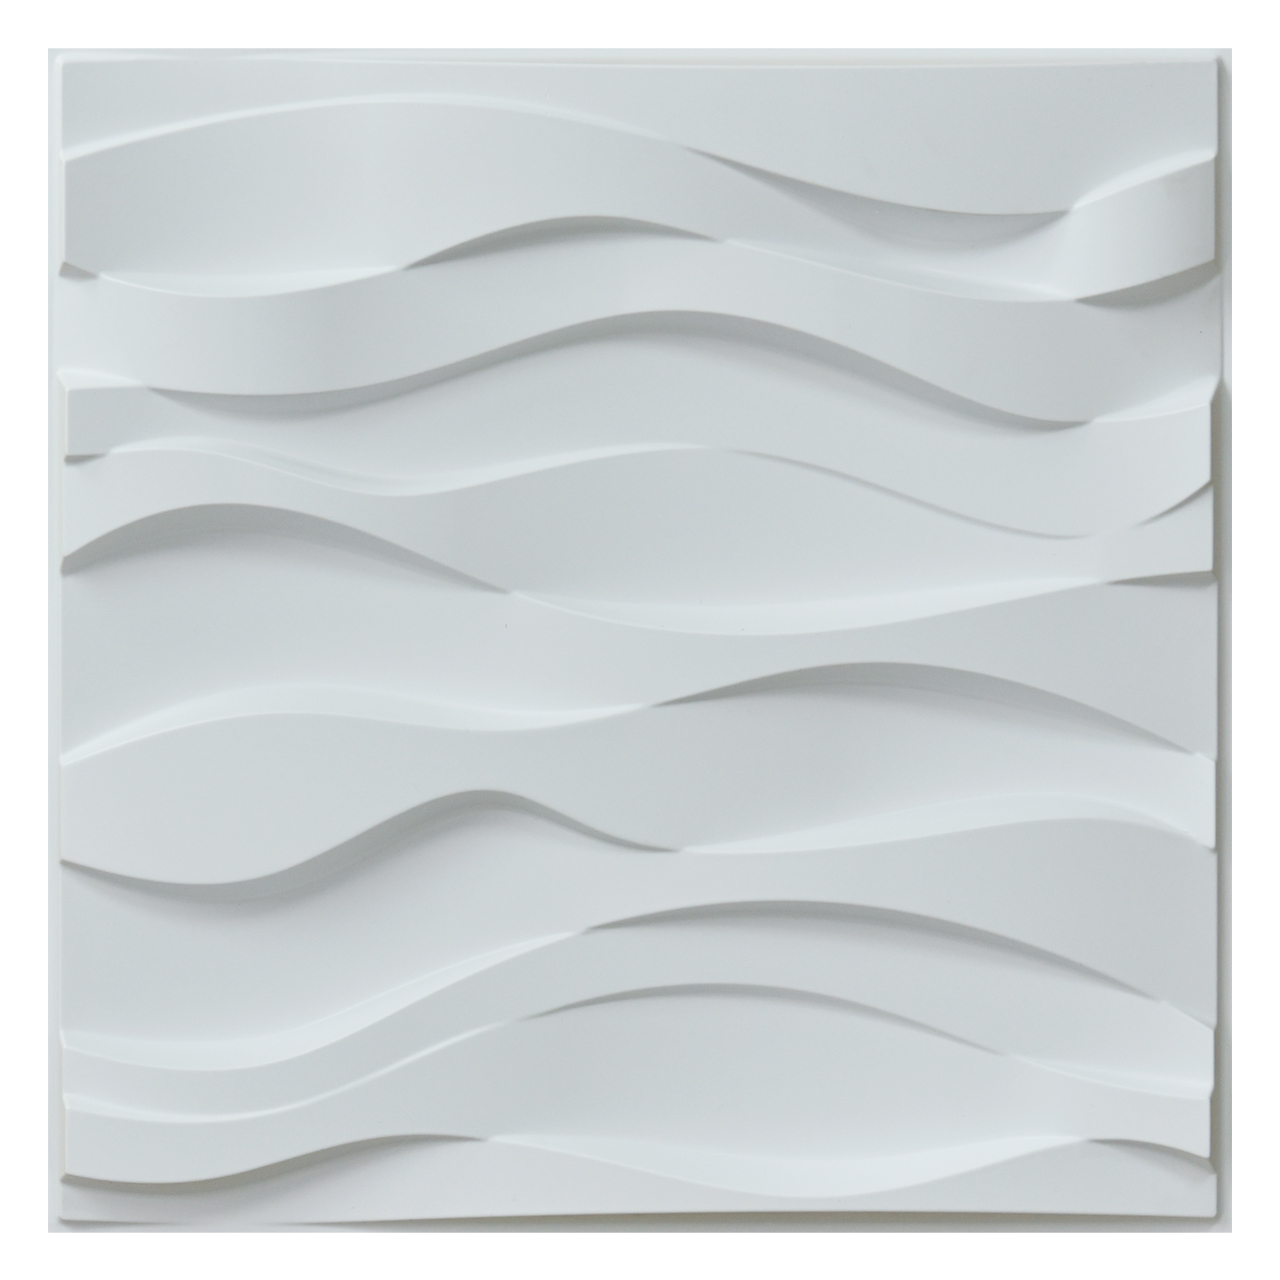 A10041 - 3D Wall Panel PVC Wave Wall Design, White, 12 Tiles 32 SF